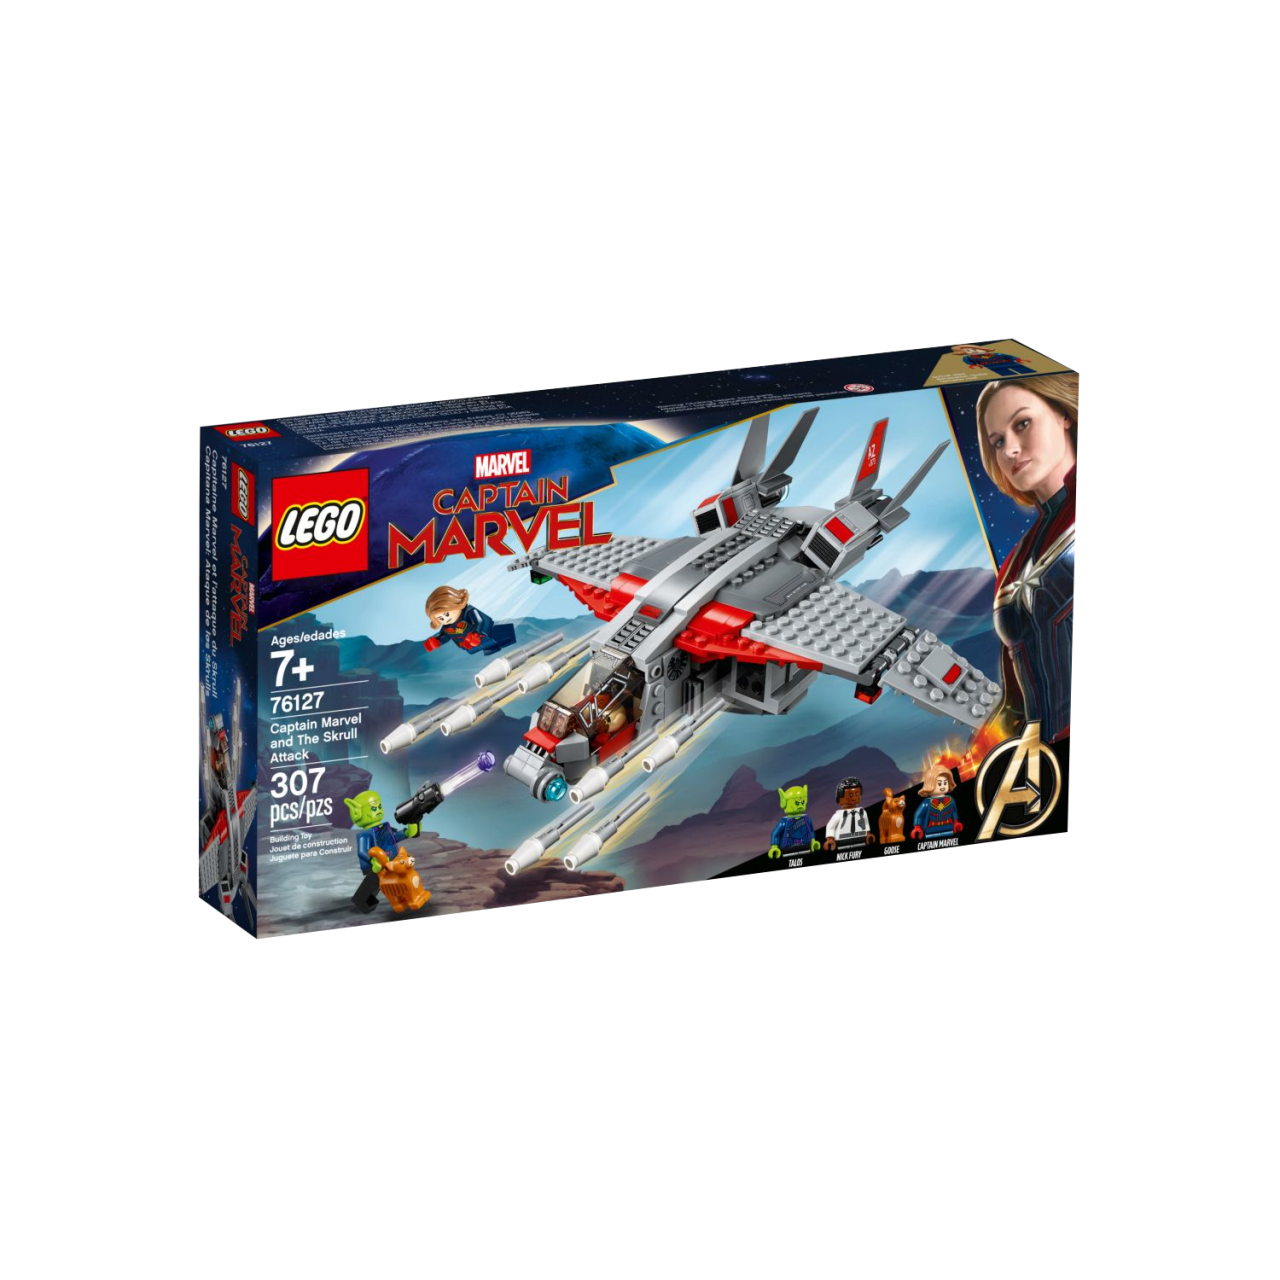 LEGO MARVEL SUPER HEROES 76127 Captain Marvel und die Skrull-Attacke